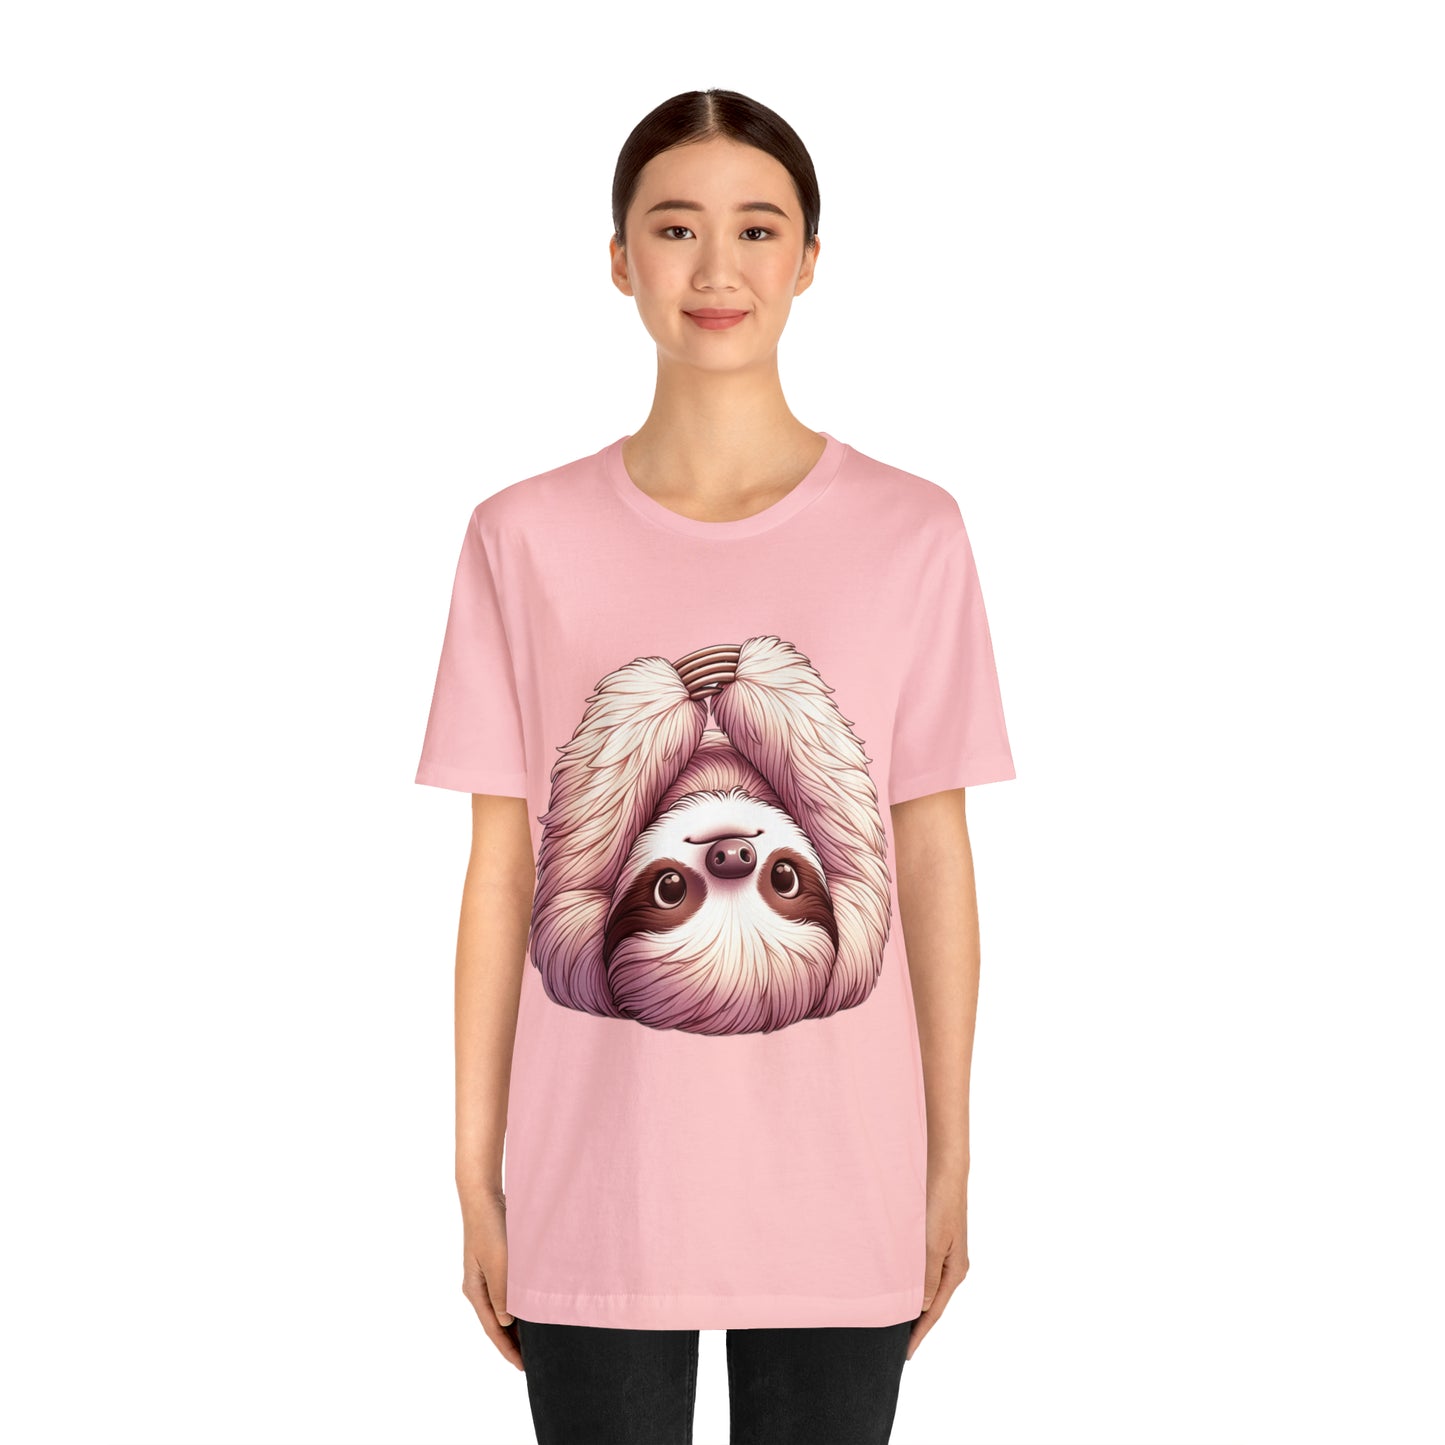 Sloth Yoga T-Shirt, Funny Yoga Shirt, Yoga Teacher Gift, Sloth T Shirt